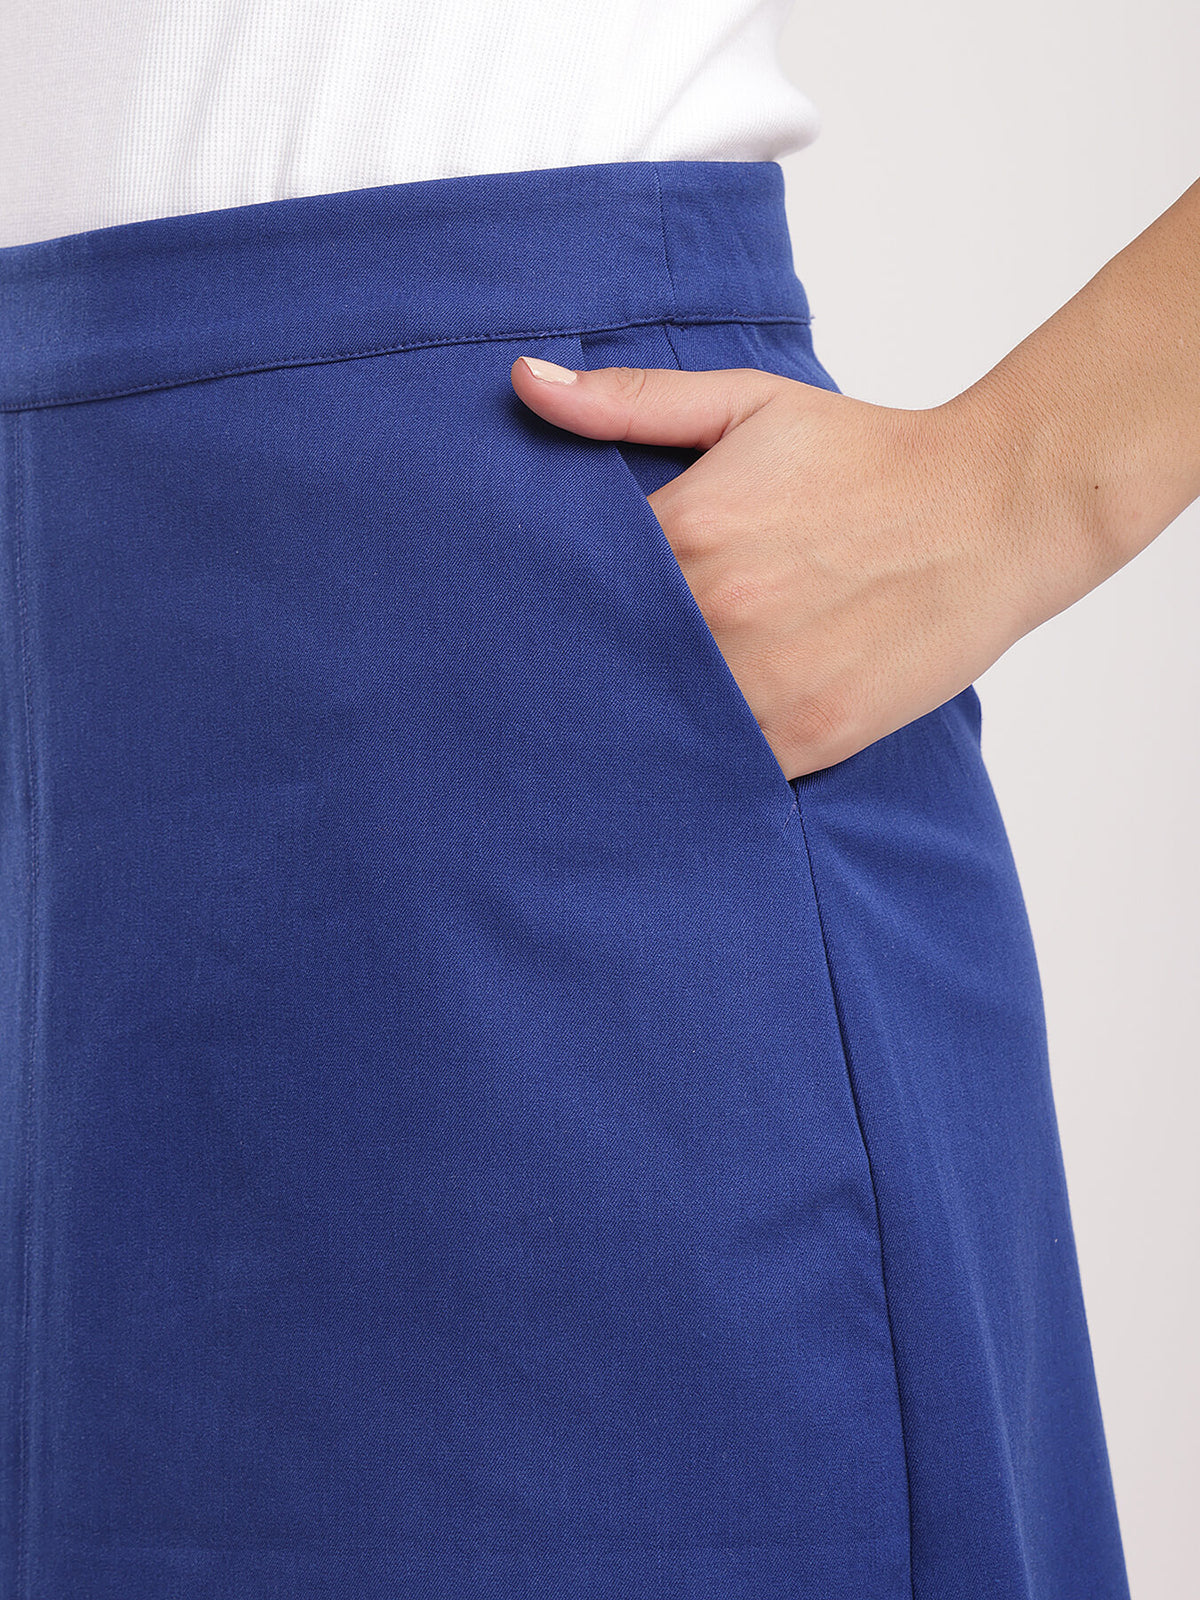 Stretchable A-line Skirt - Royal Blue